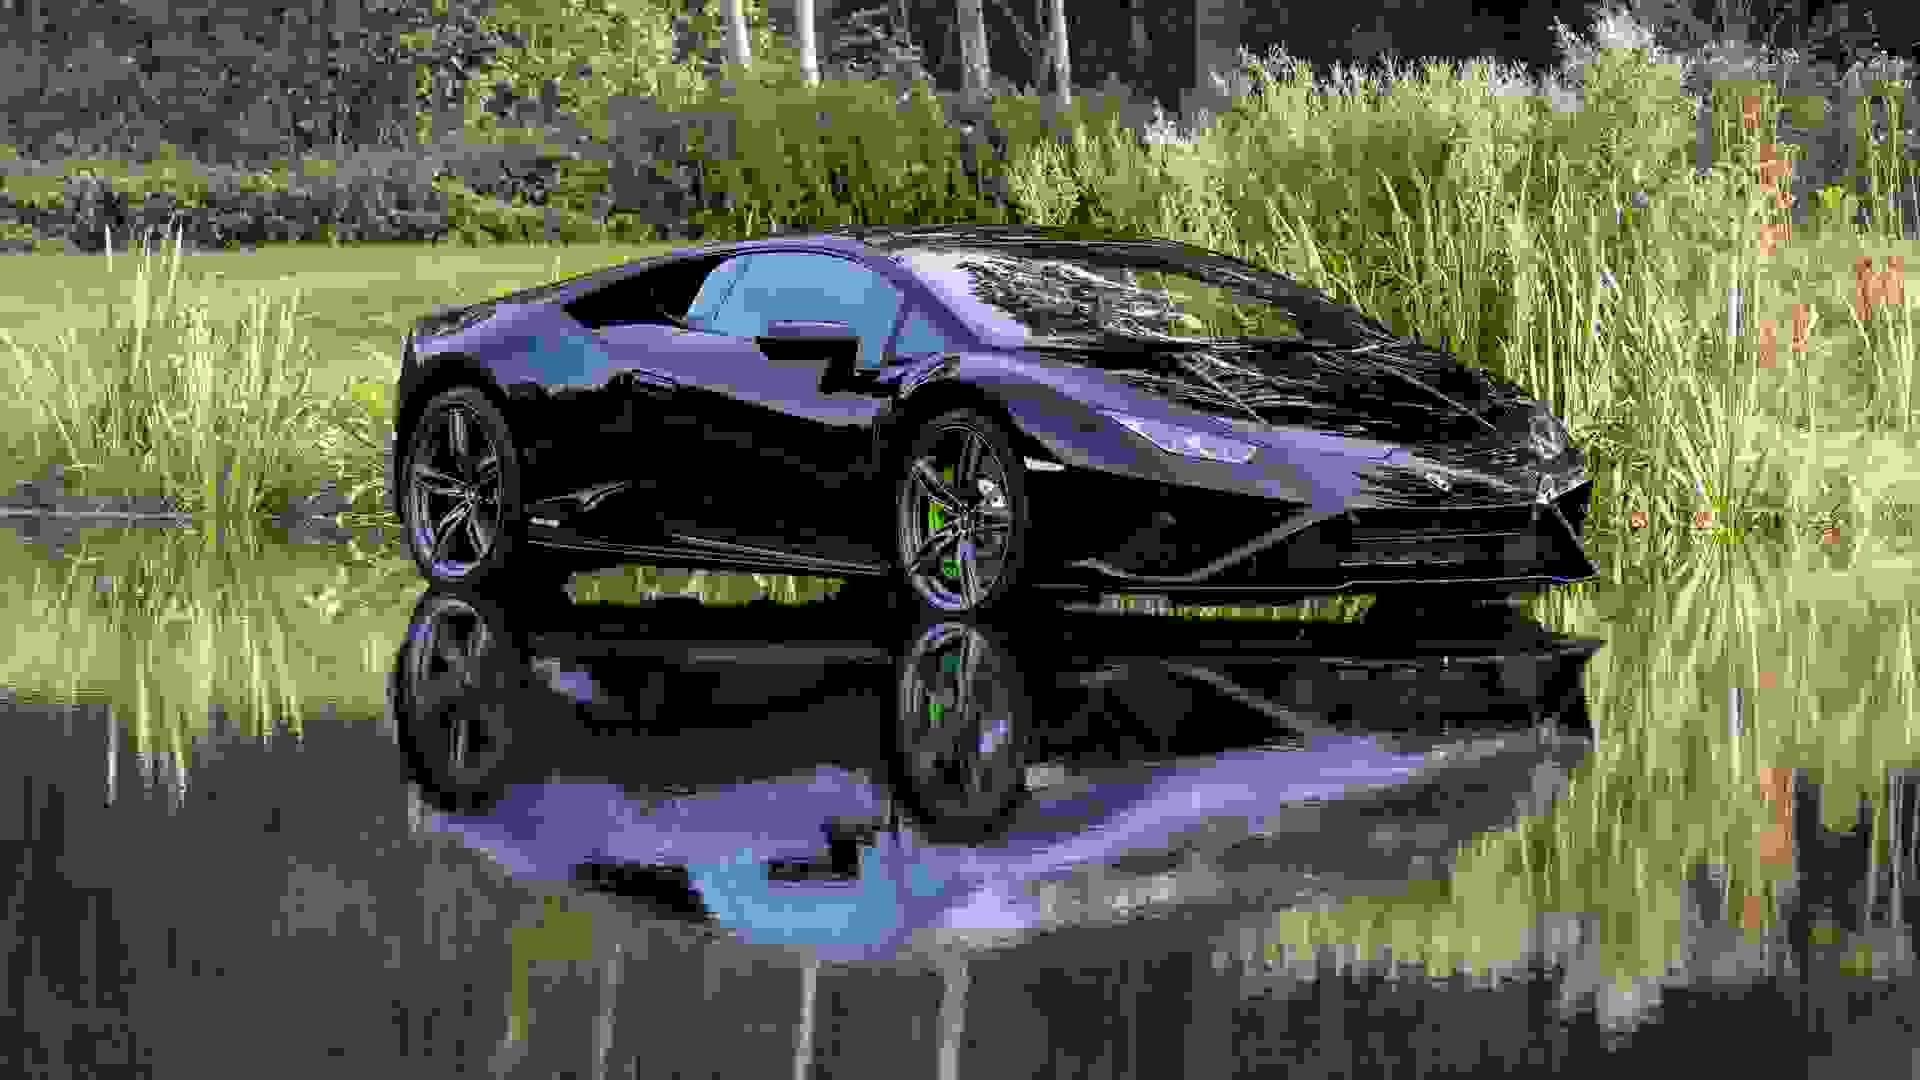 Lamborghini Huracan Photo 0c9c8d56-2e59-4eb5-9dd8-56afe5b228da.jpg